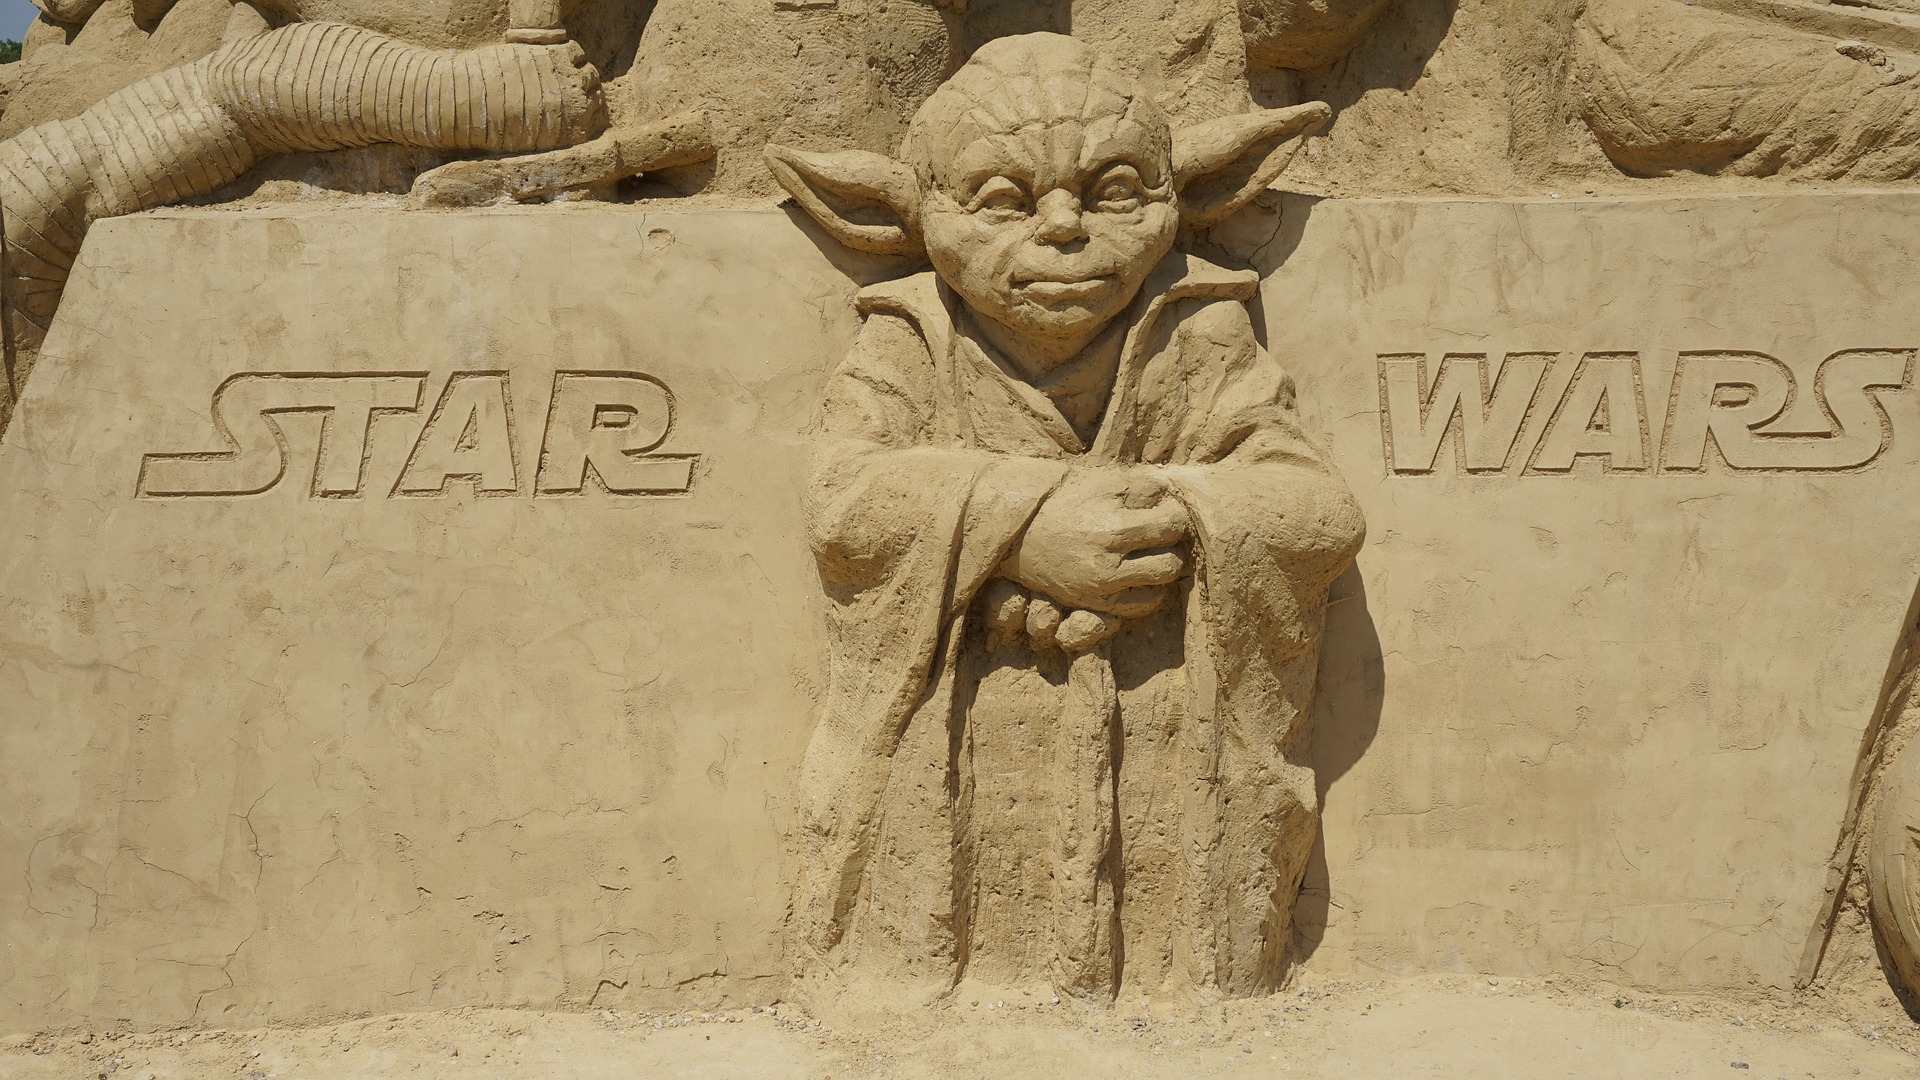 PHOTO: Artwork made from sand featuring Yoda. Photo courtesy of mihailmihailovol from Pixabay.